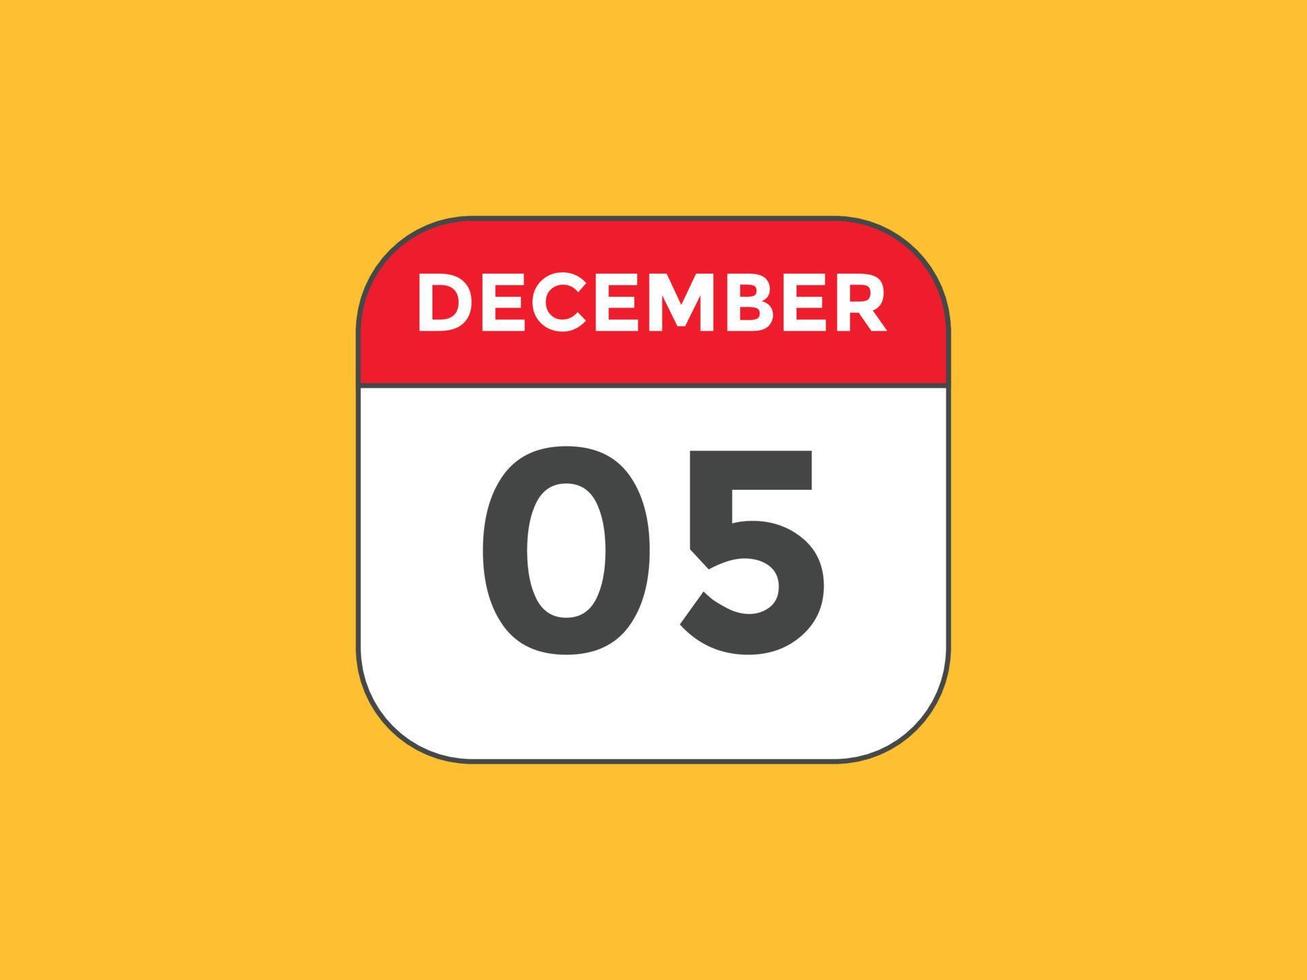 december 5 calendar reminder. 5th december daily calendar icon template. Calendar 5th december icon Design template. Vector illustration